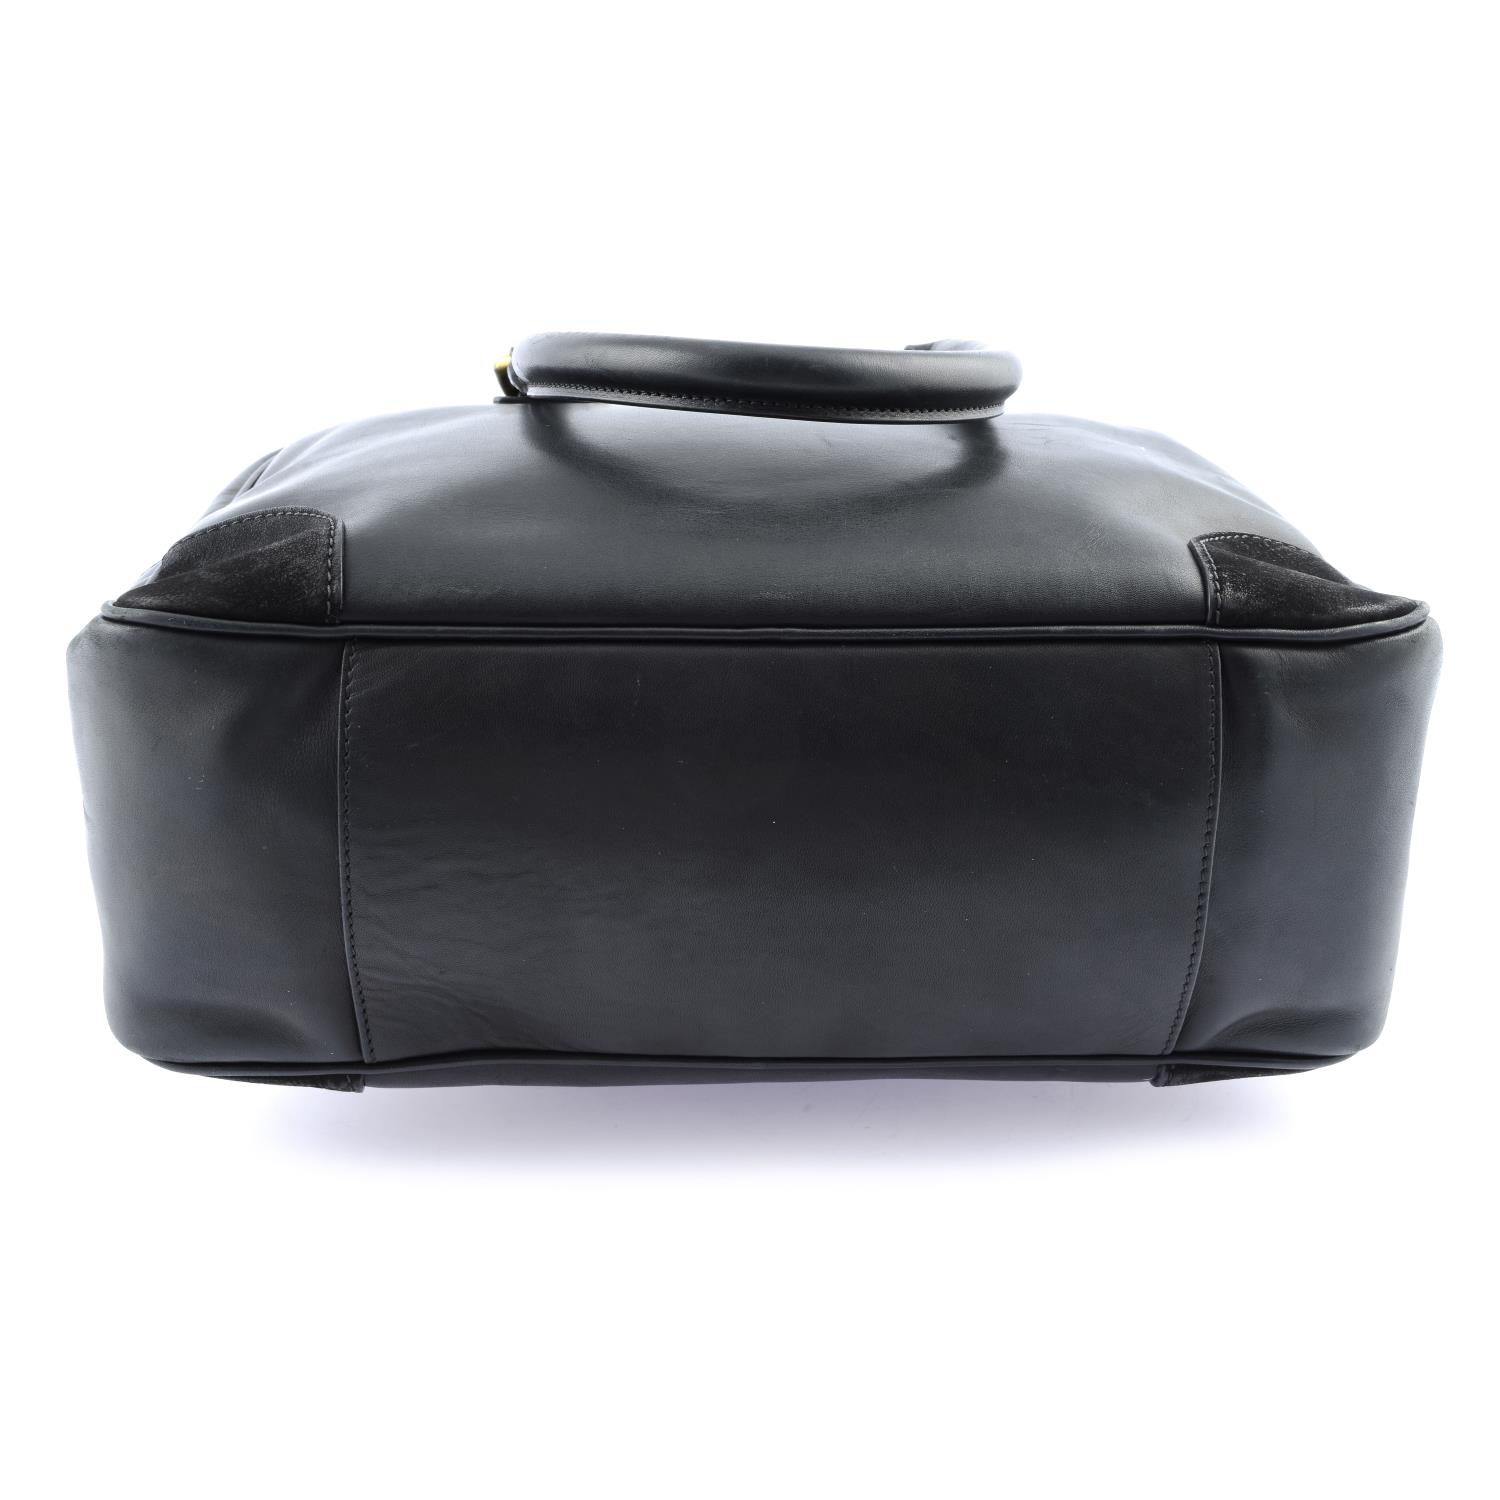 CÉLINE - a leather handbag. - Image 4 of 4